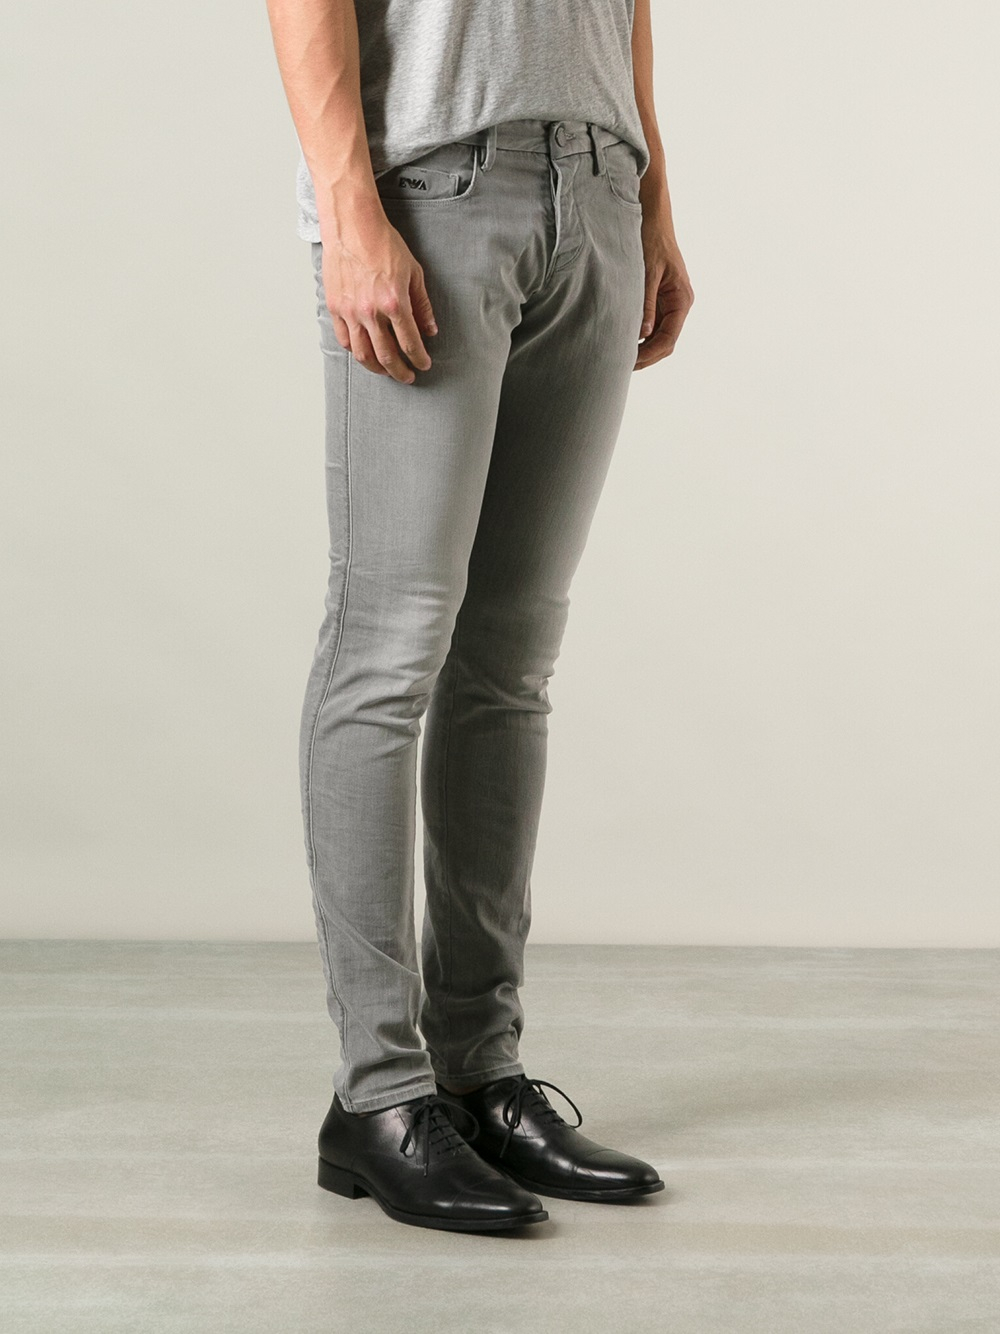 armani jeans mens skinny - 61% OFF - awi.com